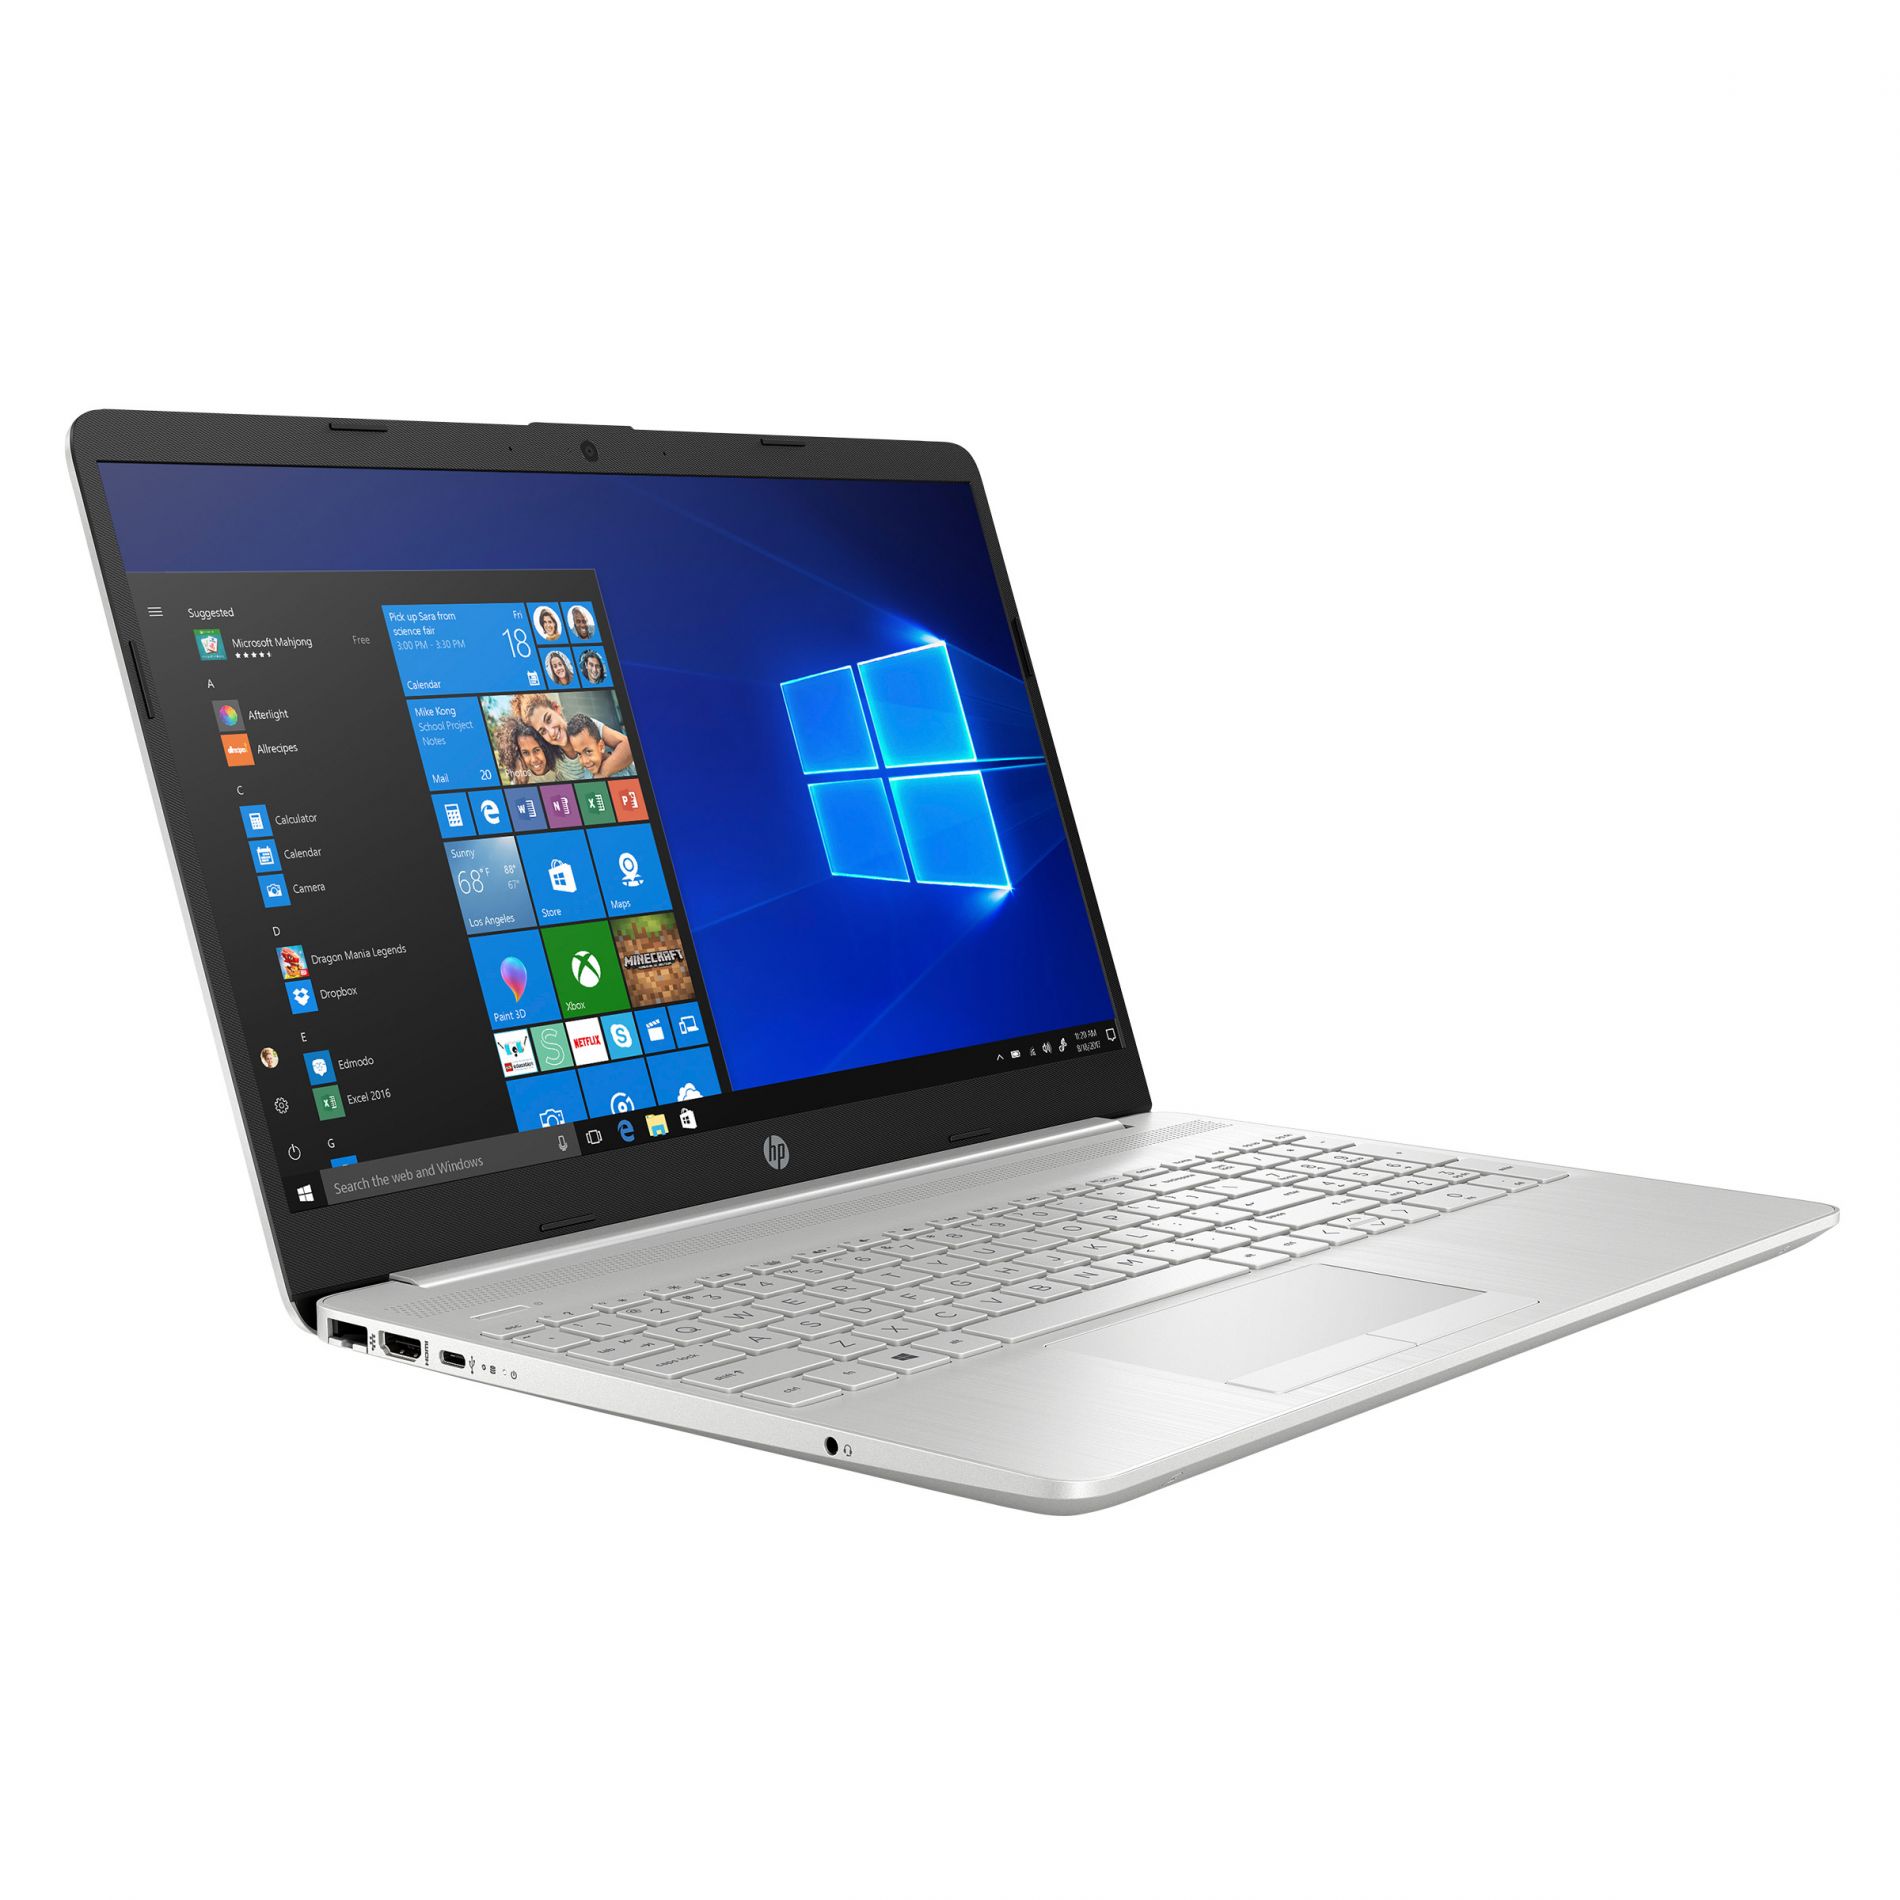 Laptop HP Pavilion 15-DW2025CL  Pantalla 15.6", intel core i5 10ma generacion, Ram 12GB ddr4, Disco Duro 1TB, Touch screen, Windows 10 original